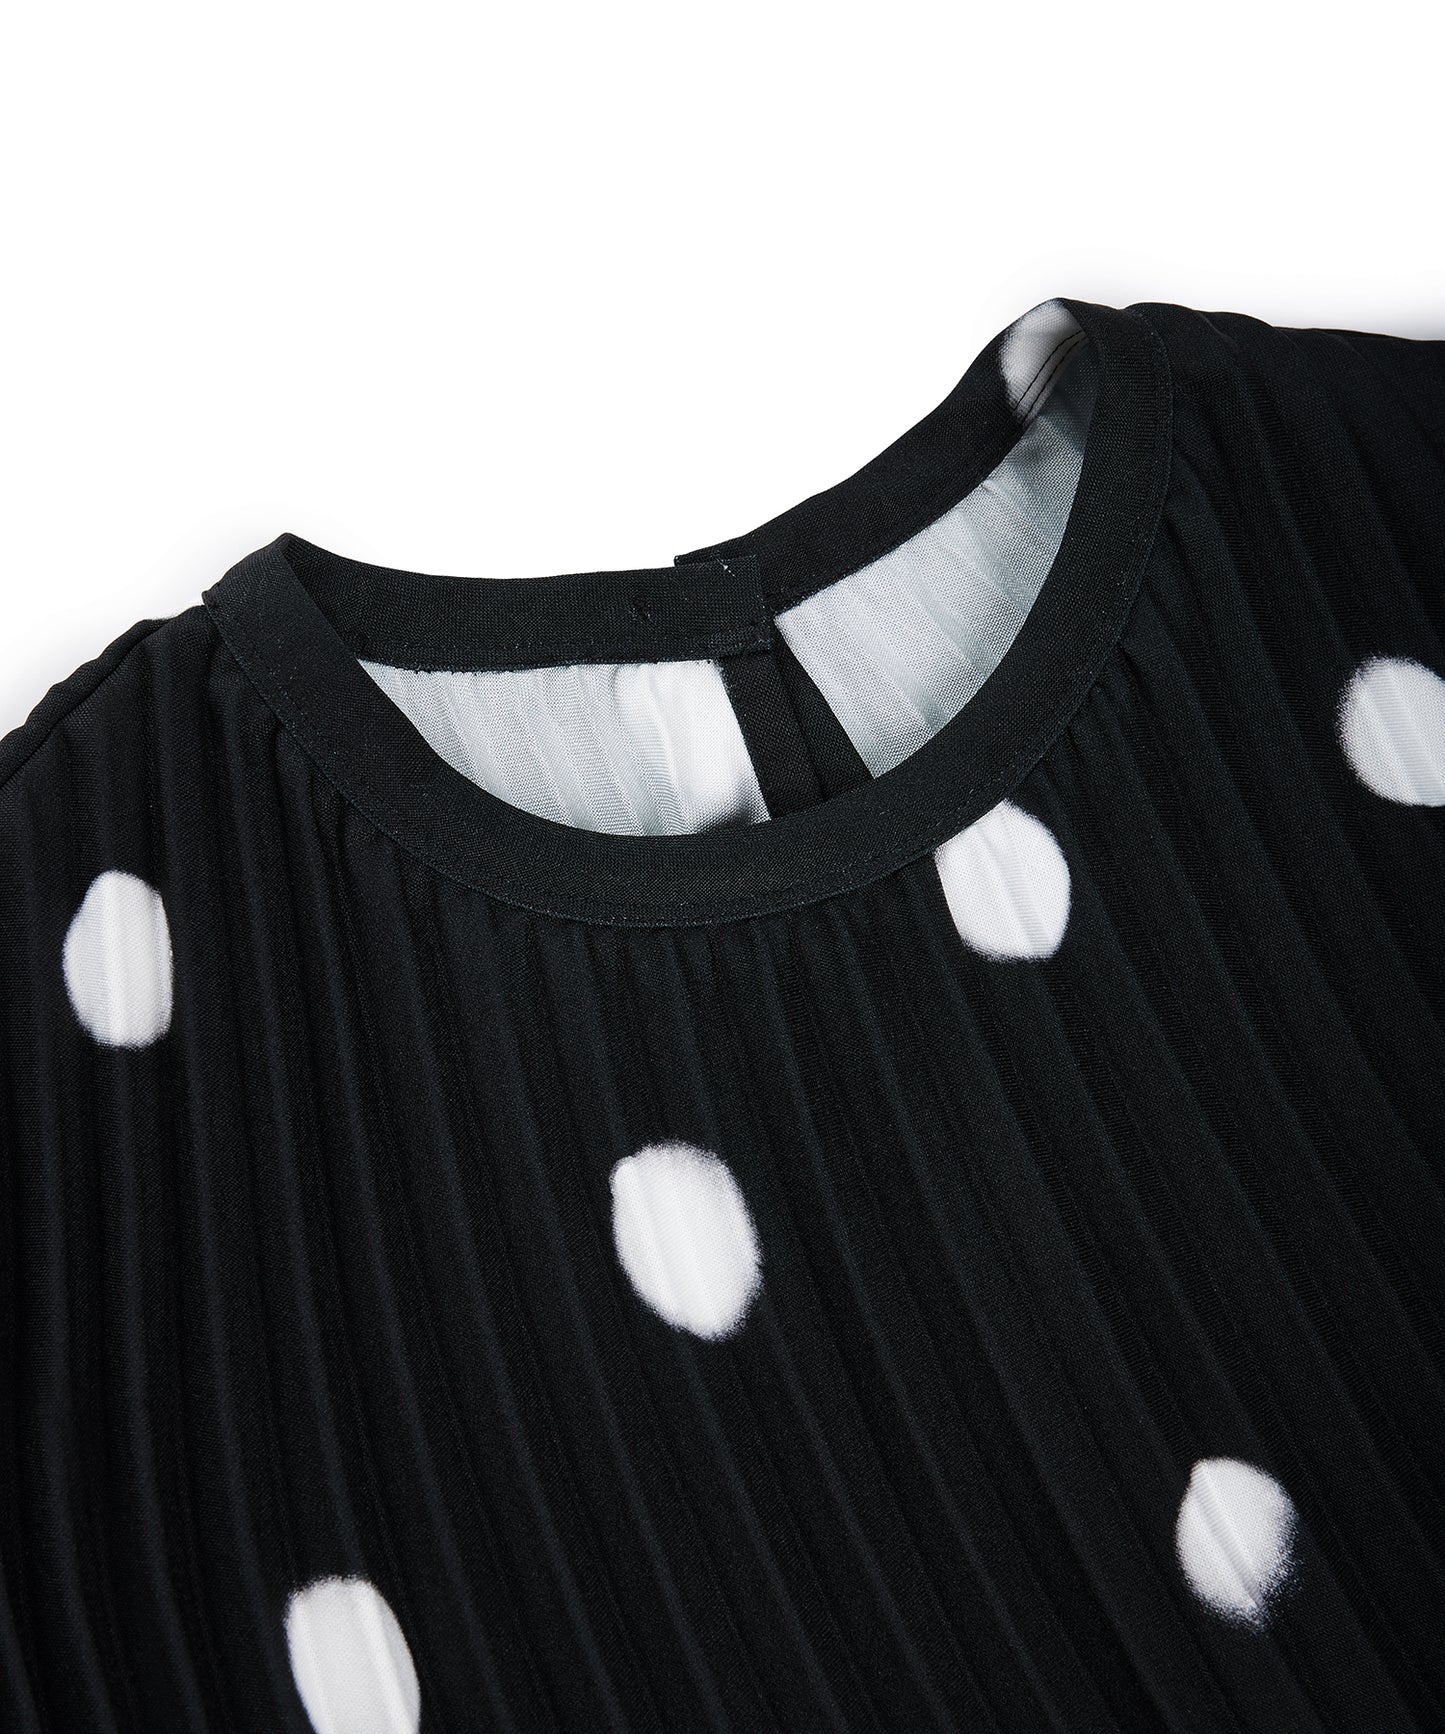 Polka-dot Wavy-pleated Polyester Dress